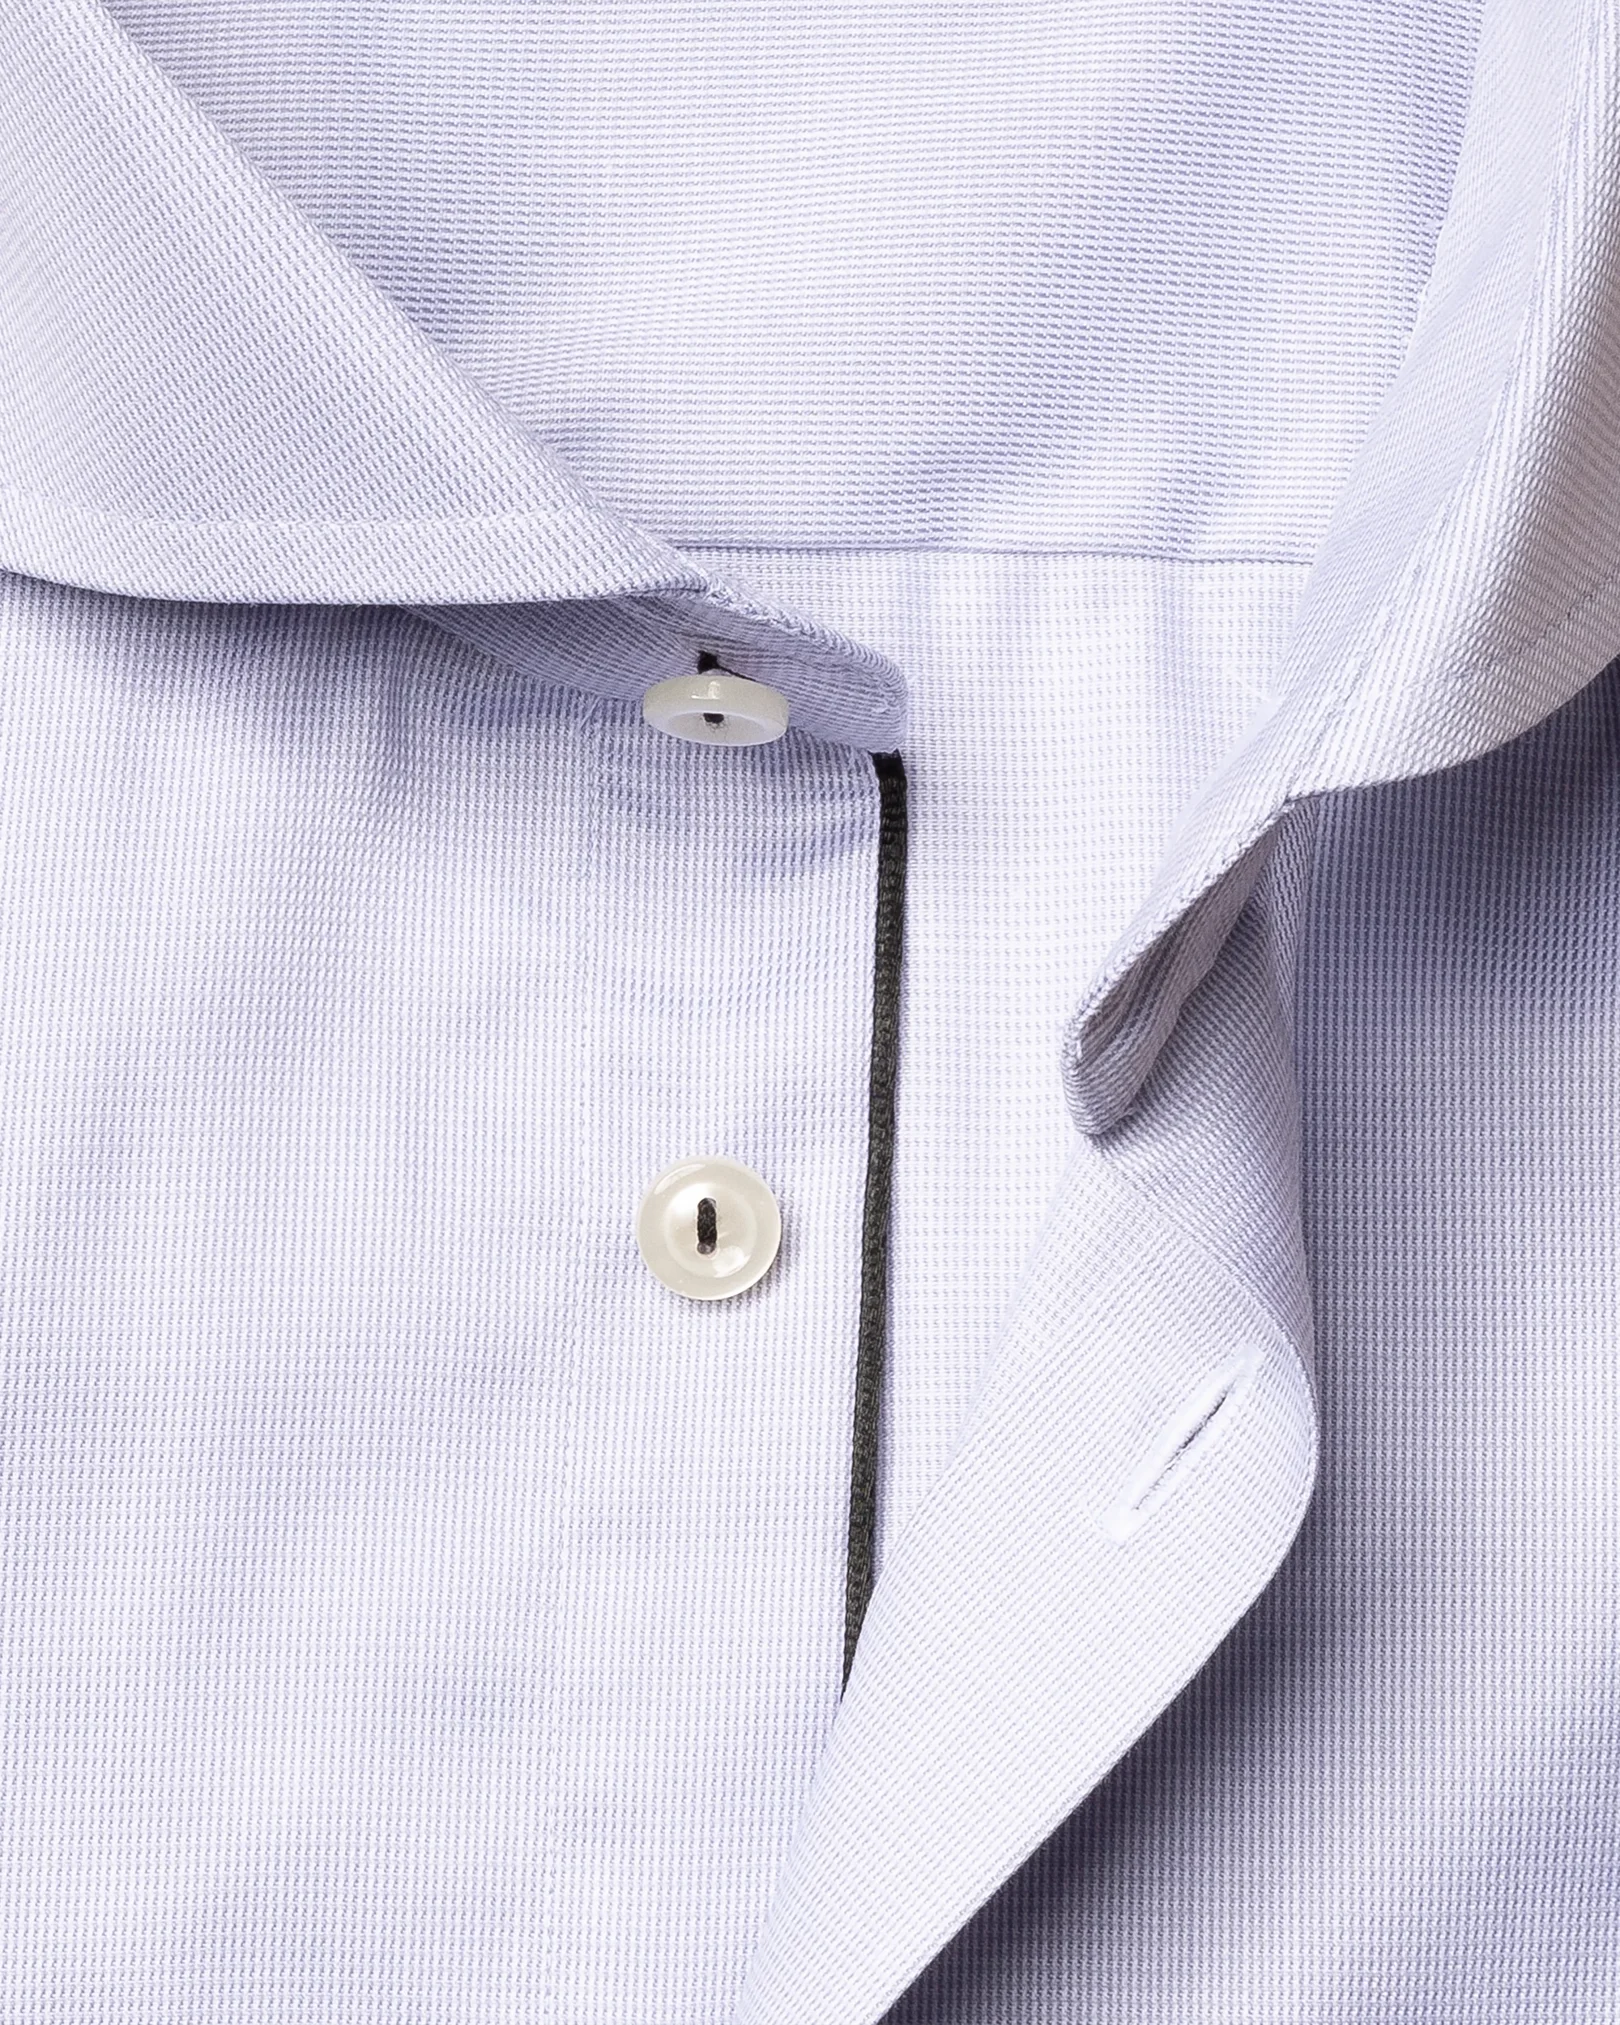 Eton - light grey royal twill shirt extreme cut away